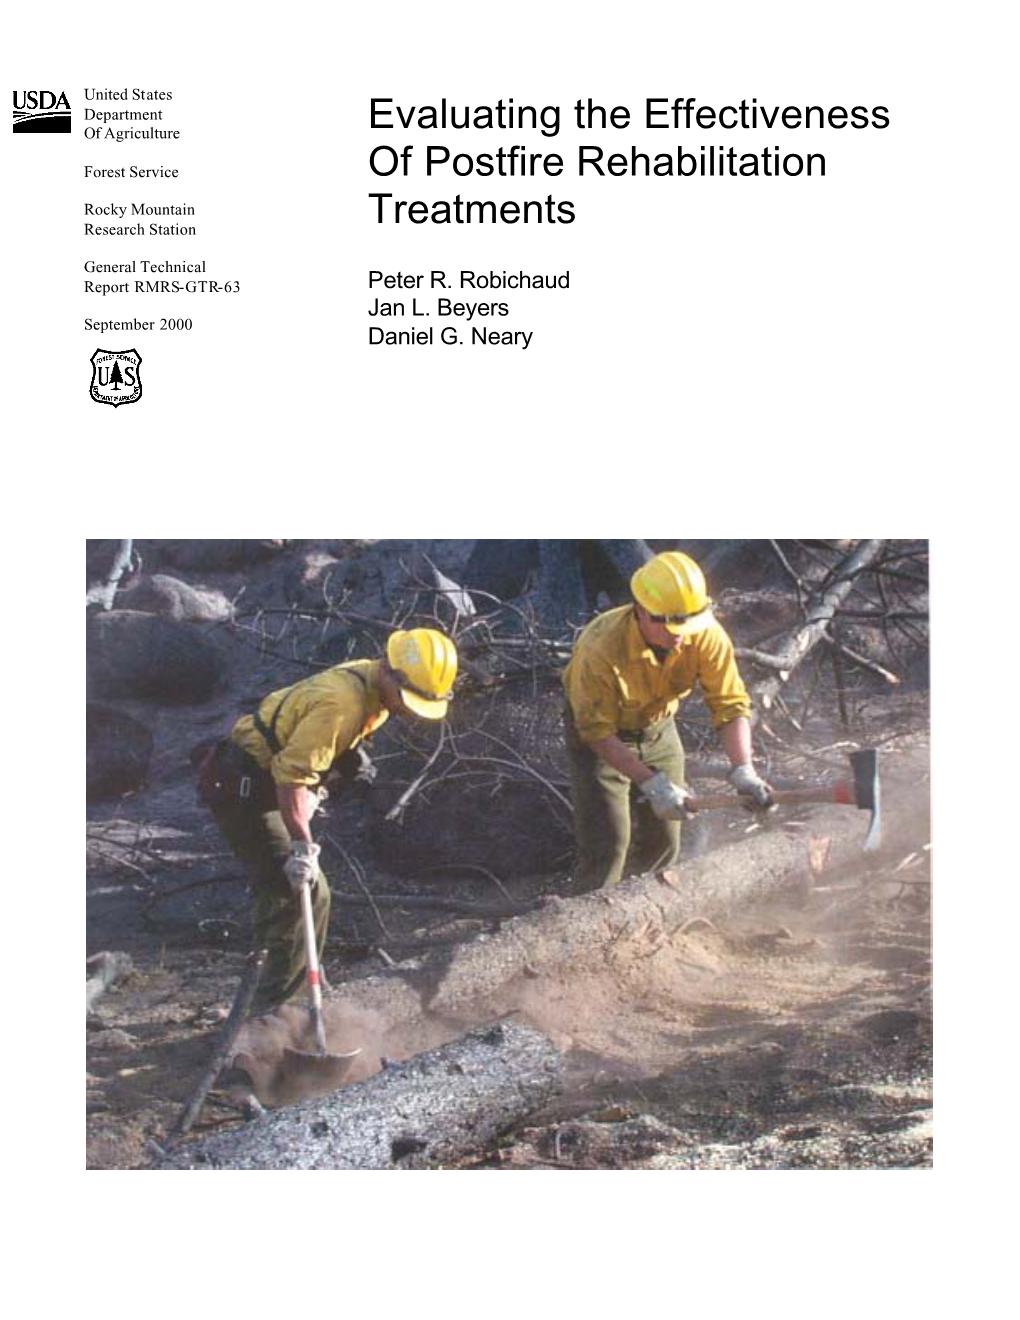 Evaluating the Effectiveness of Postfire Rehabilitation Treatments